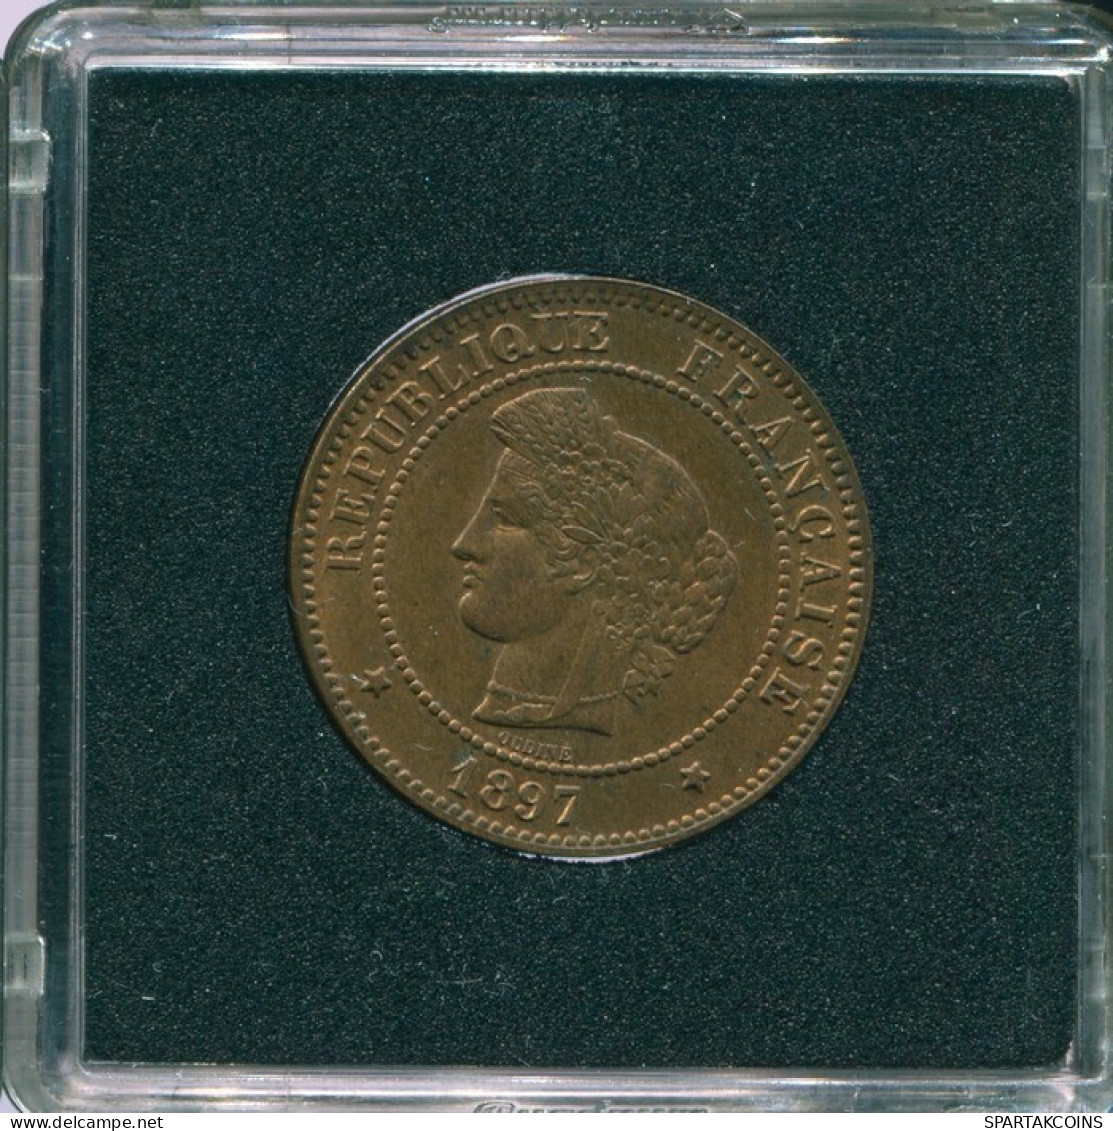 5 CENTIMES 1897 A FRANCE Coin CERES UNC #FR1118.38.U.A - 5 Centimes